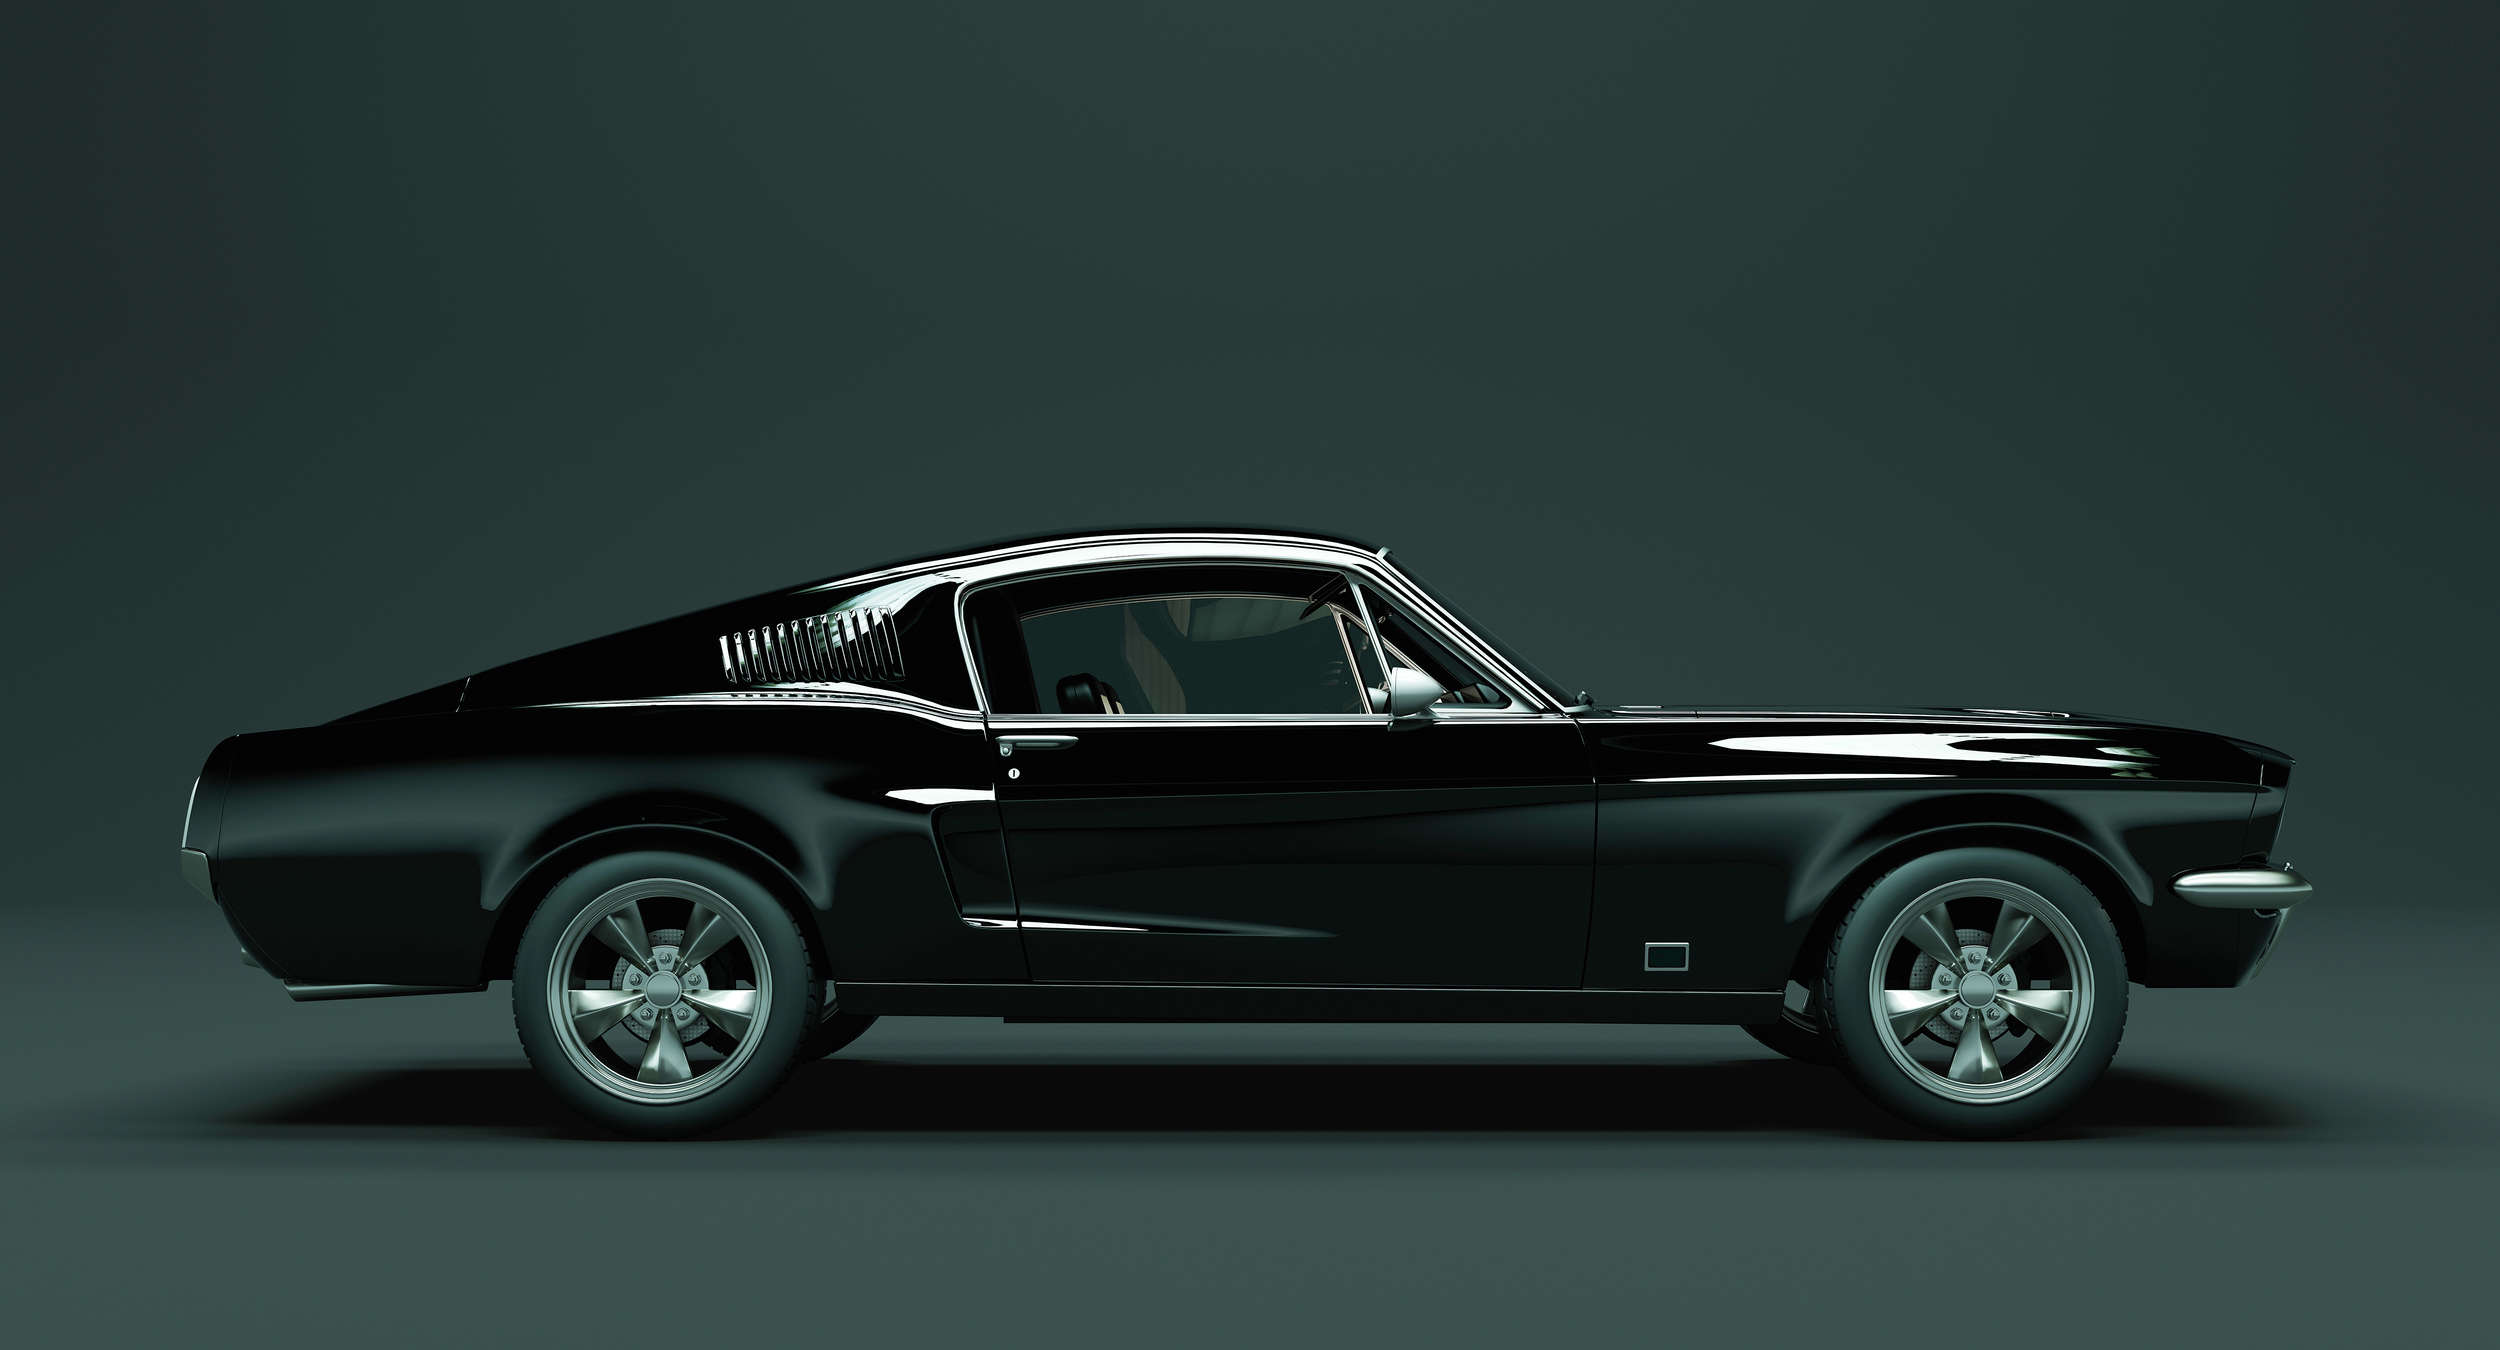             Mustang 1 - Fotomurali, vista laterale della Mustang, Vintage - Blu, Nero | Pile liscio perlato
        